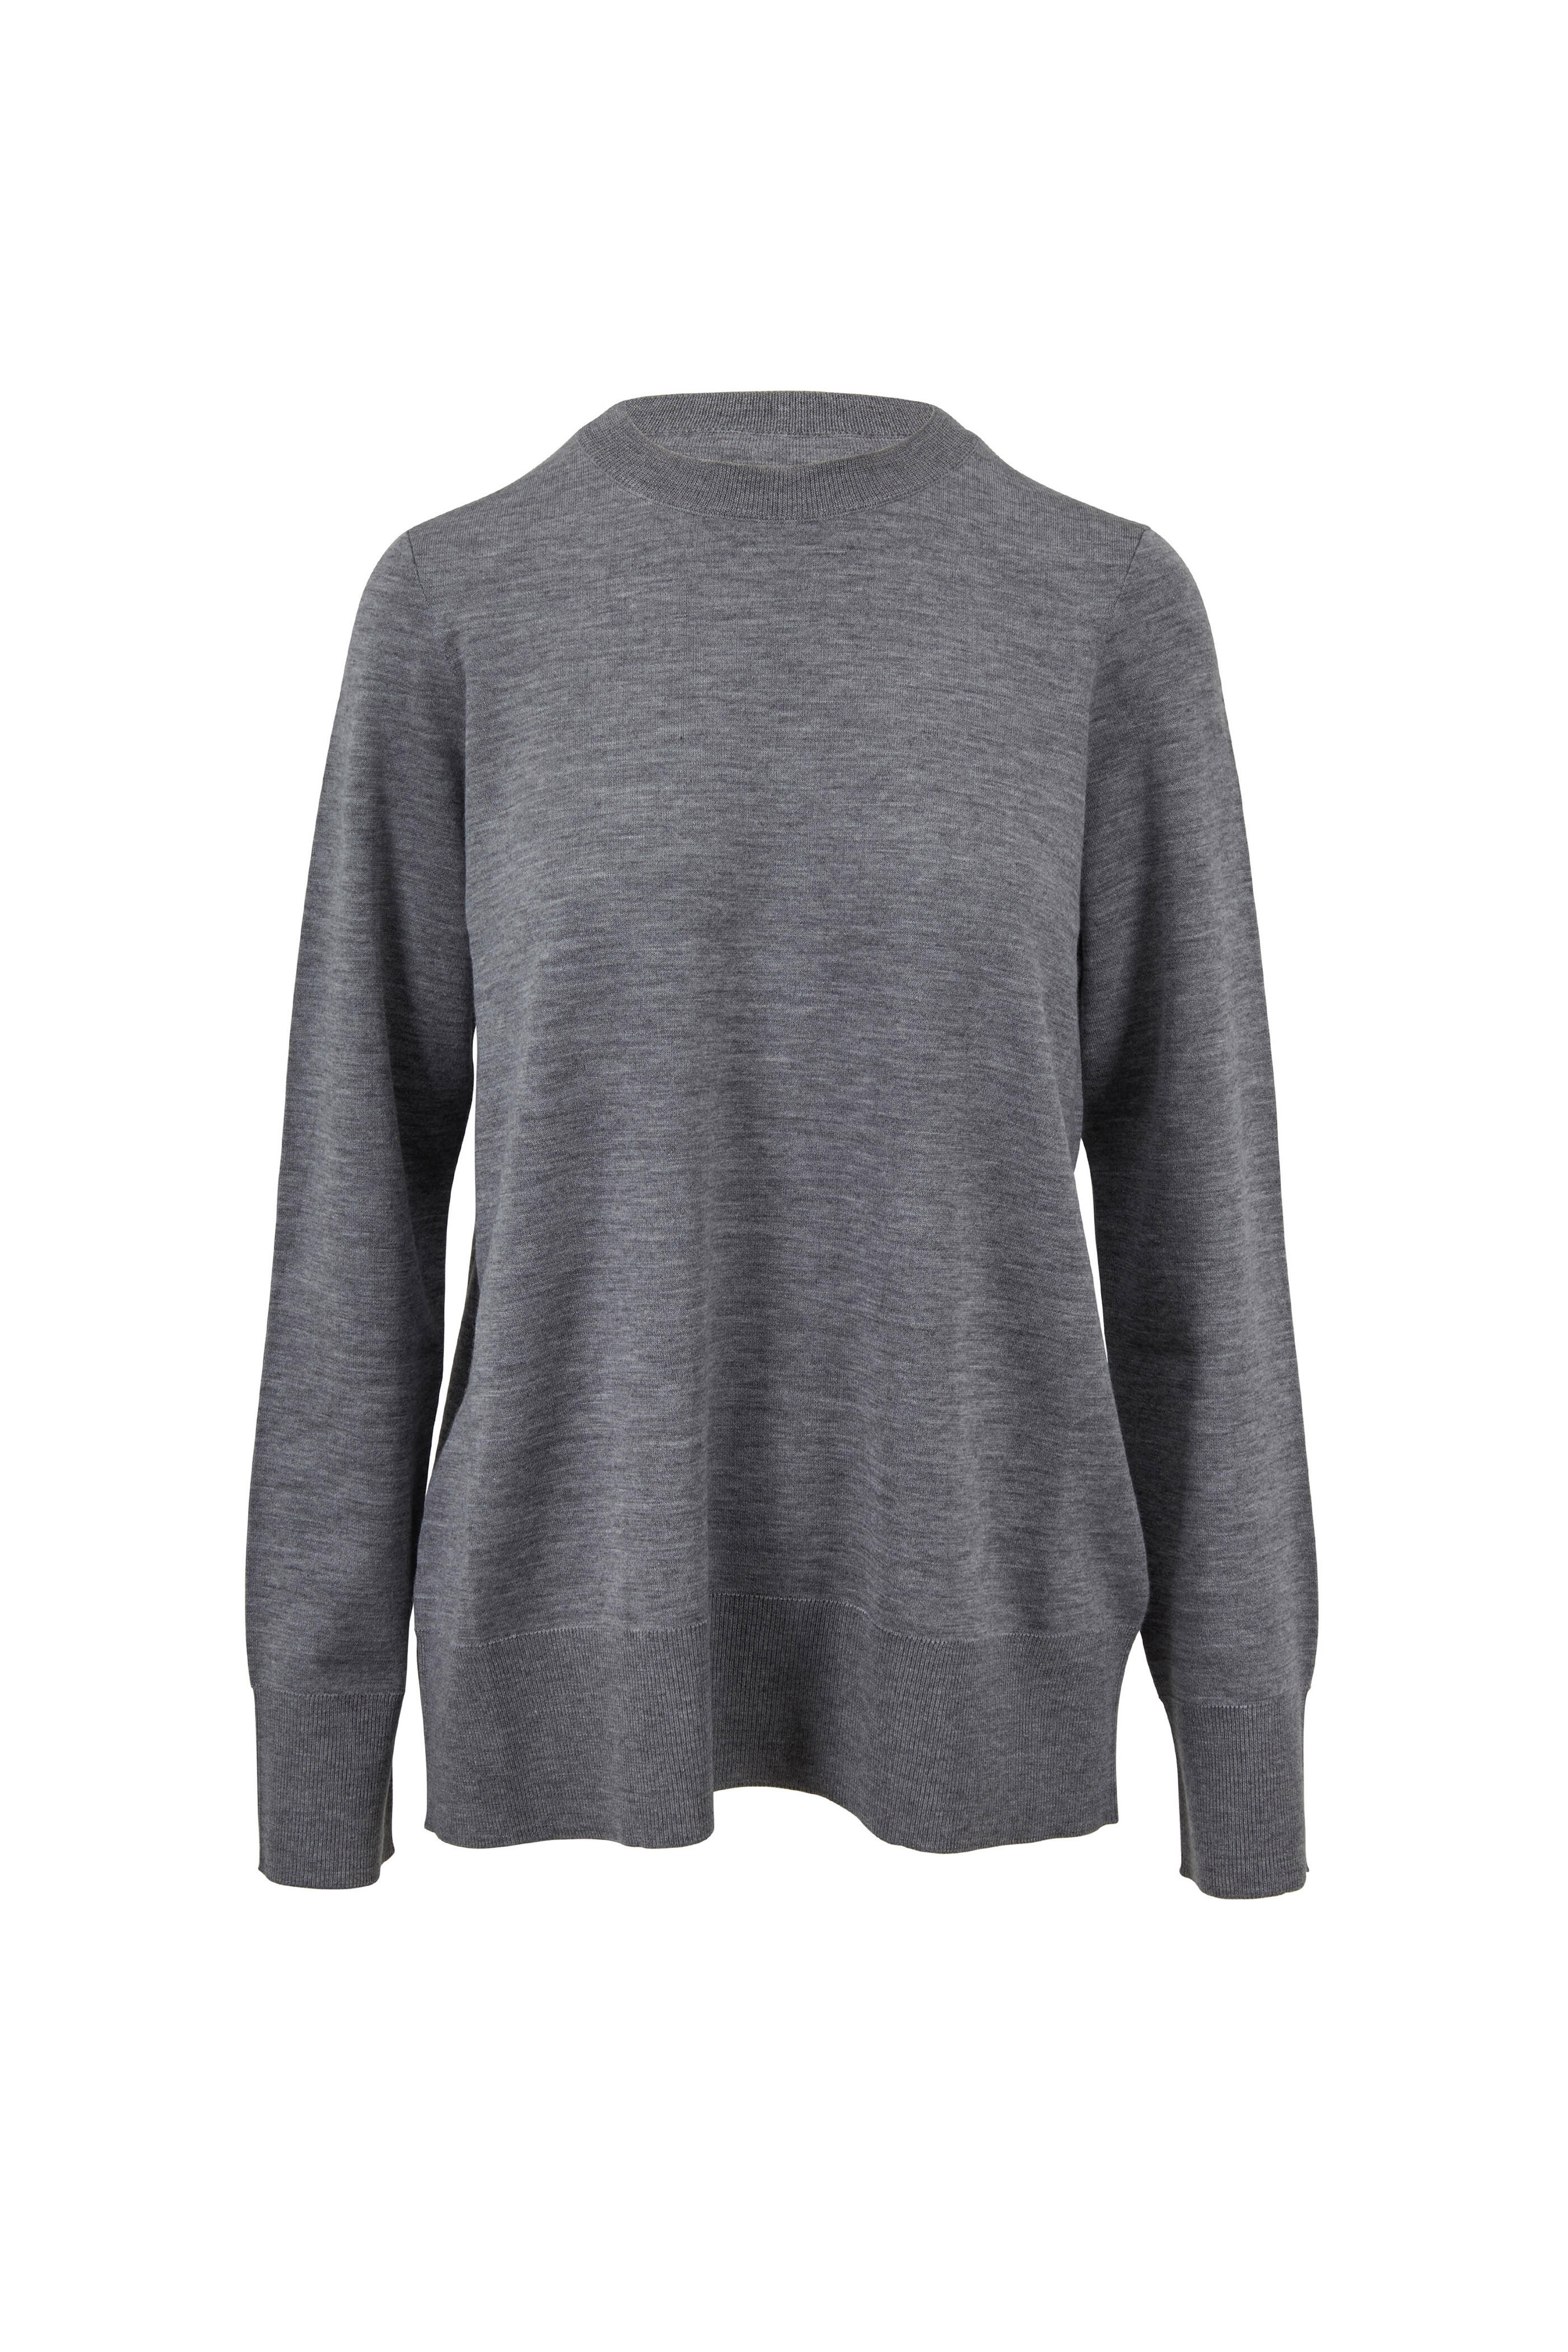 The Row - Sebellia Medium Gray Knit Cashmere Sweater